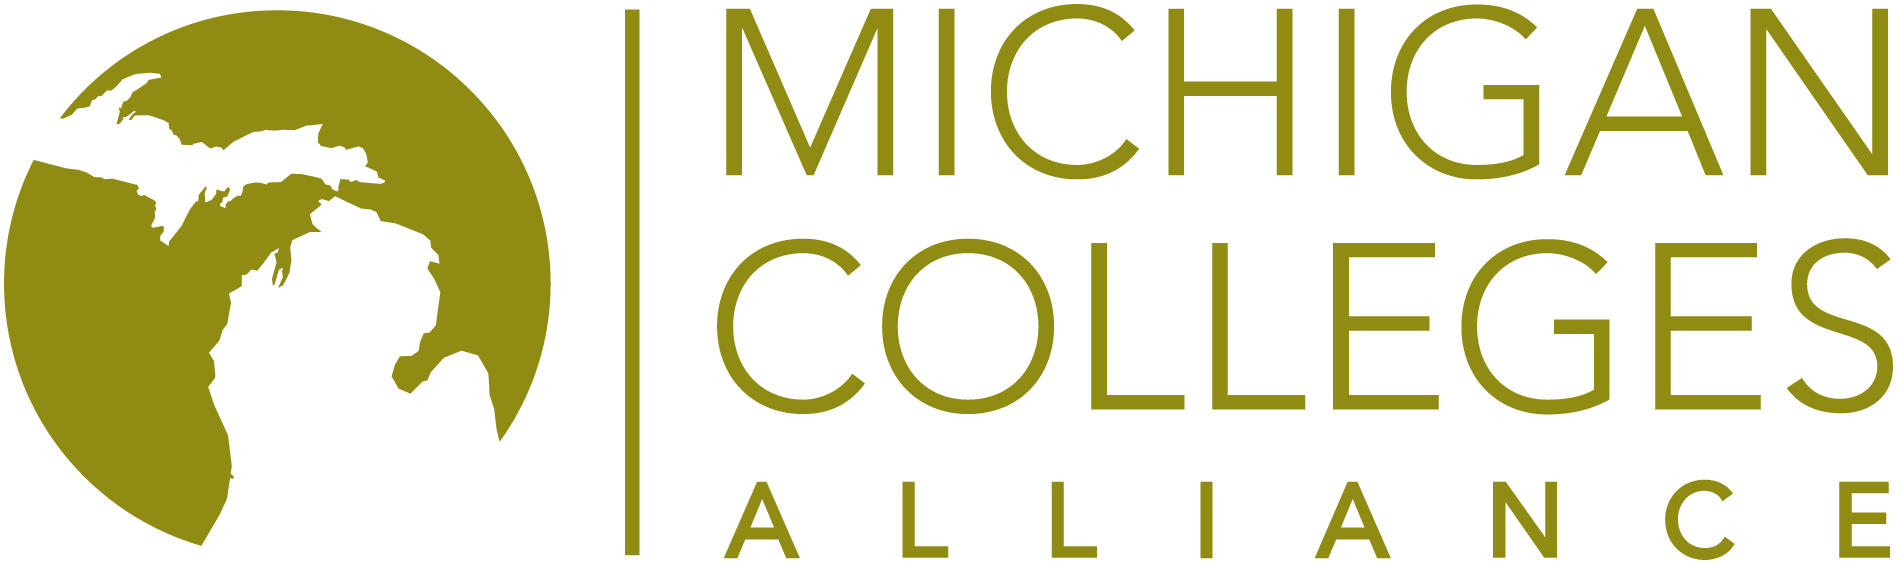 Michigan Colleges Alliance Logo